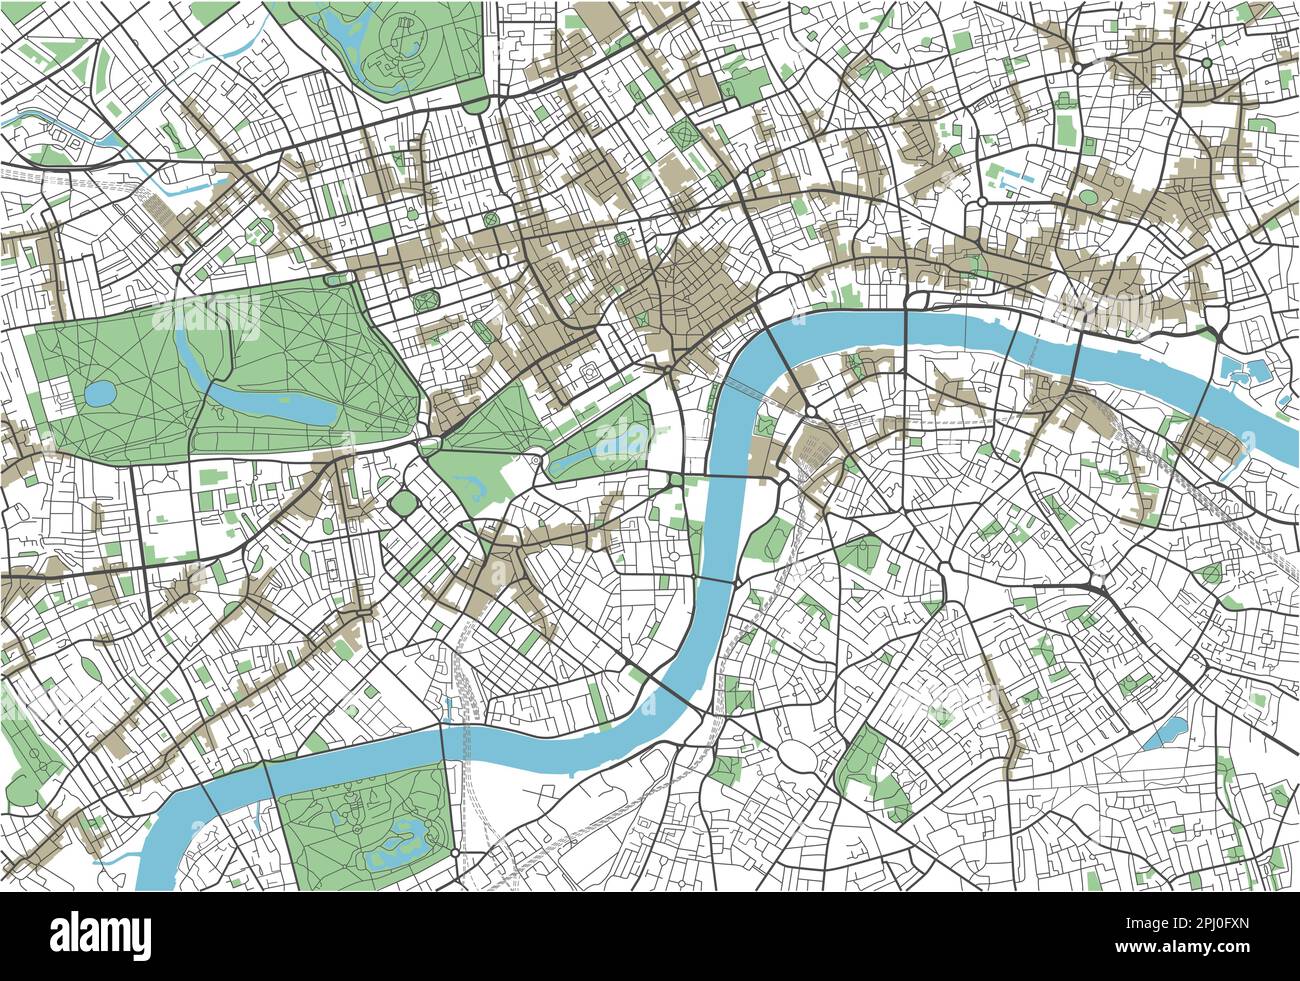 Farbenfroher Stadtplan von London Stock Vektor